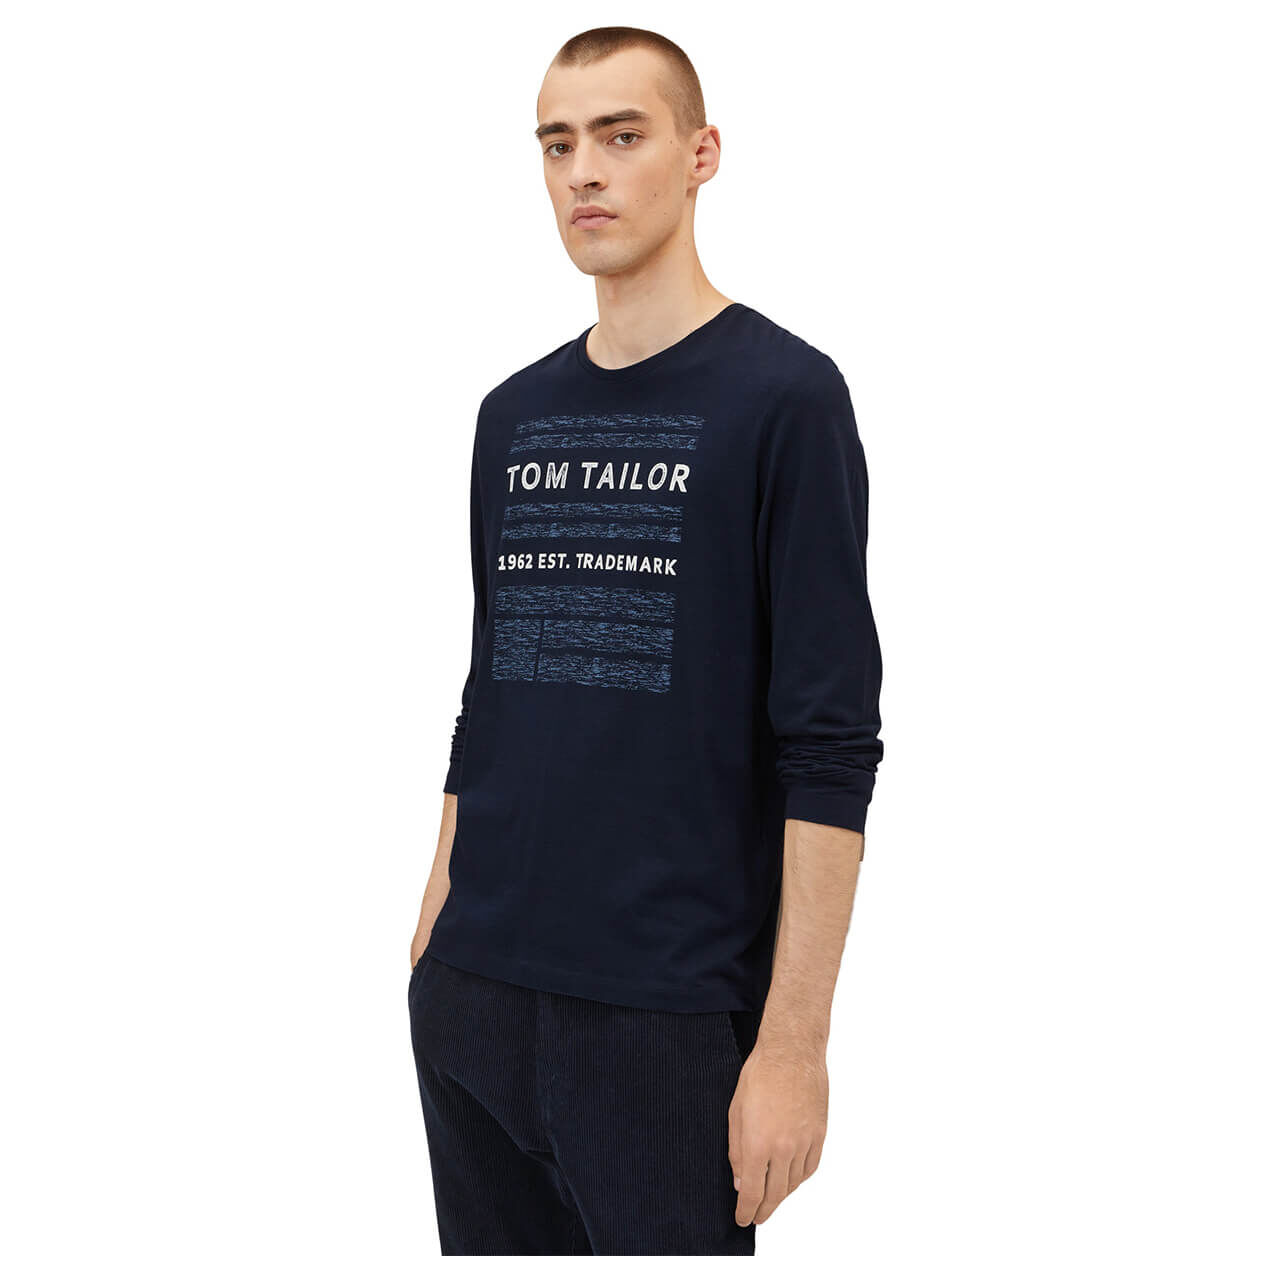 Tom Tailor Herren Langarm Shirt sky blue print